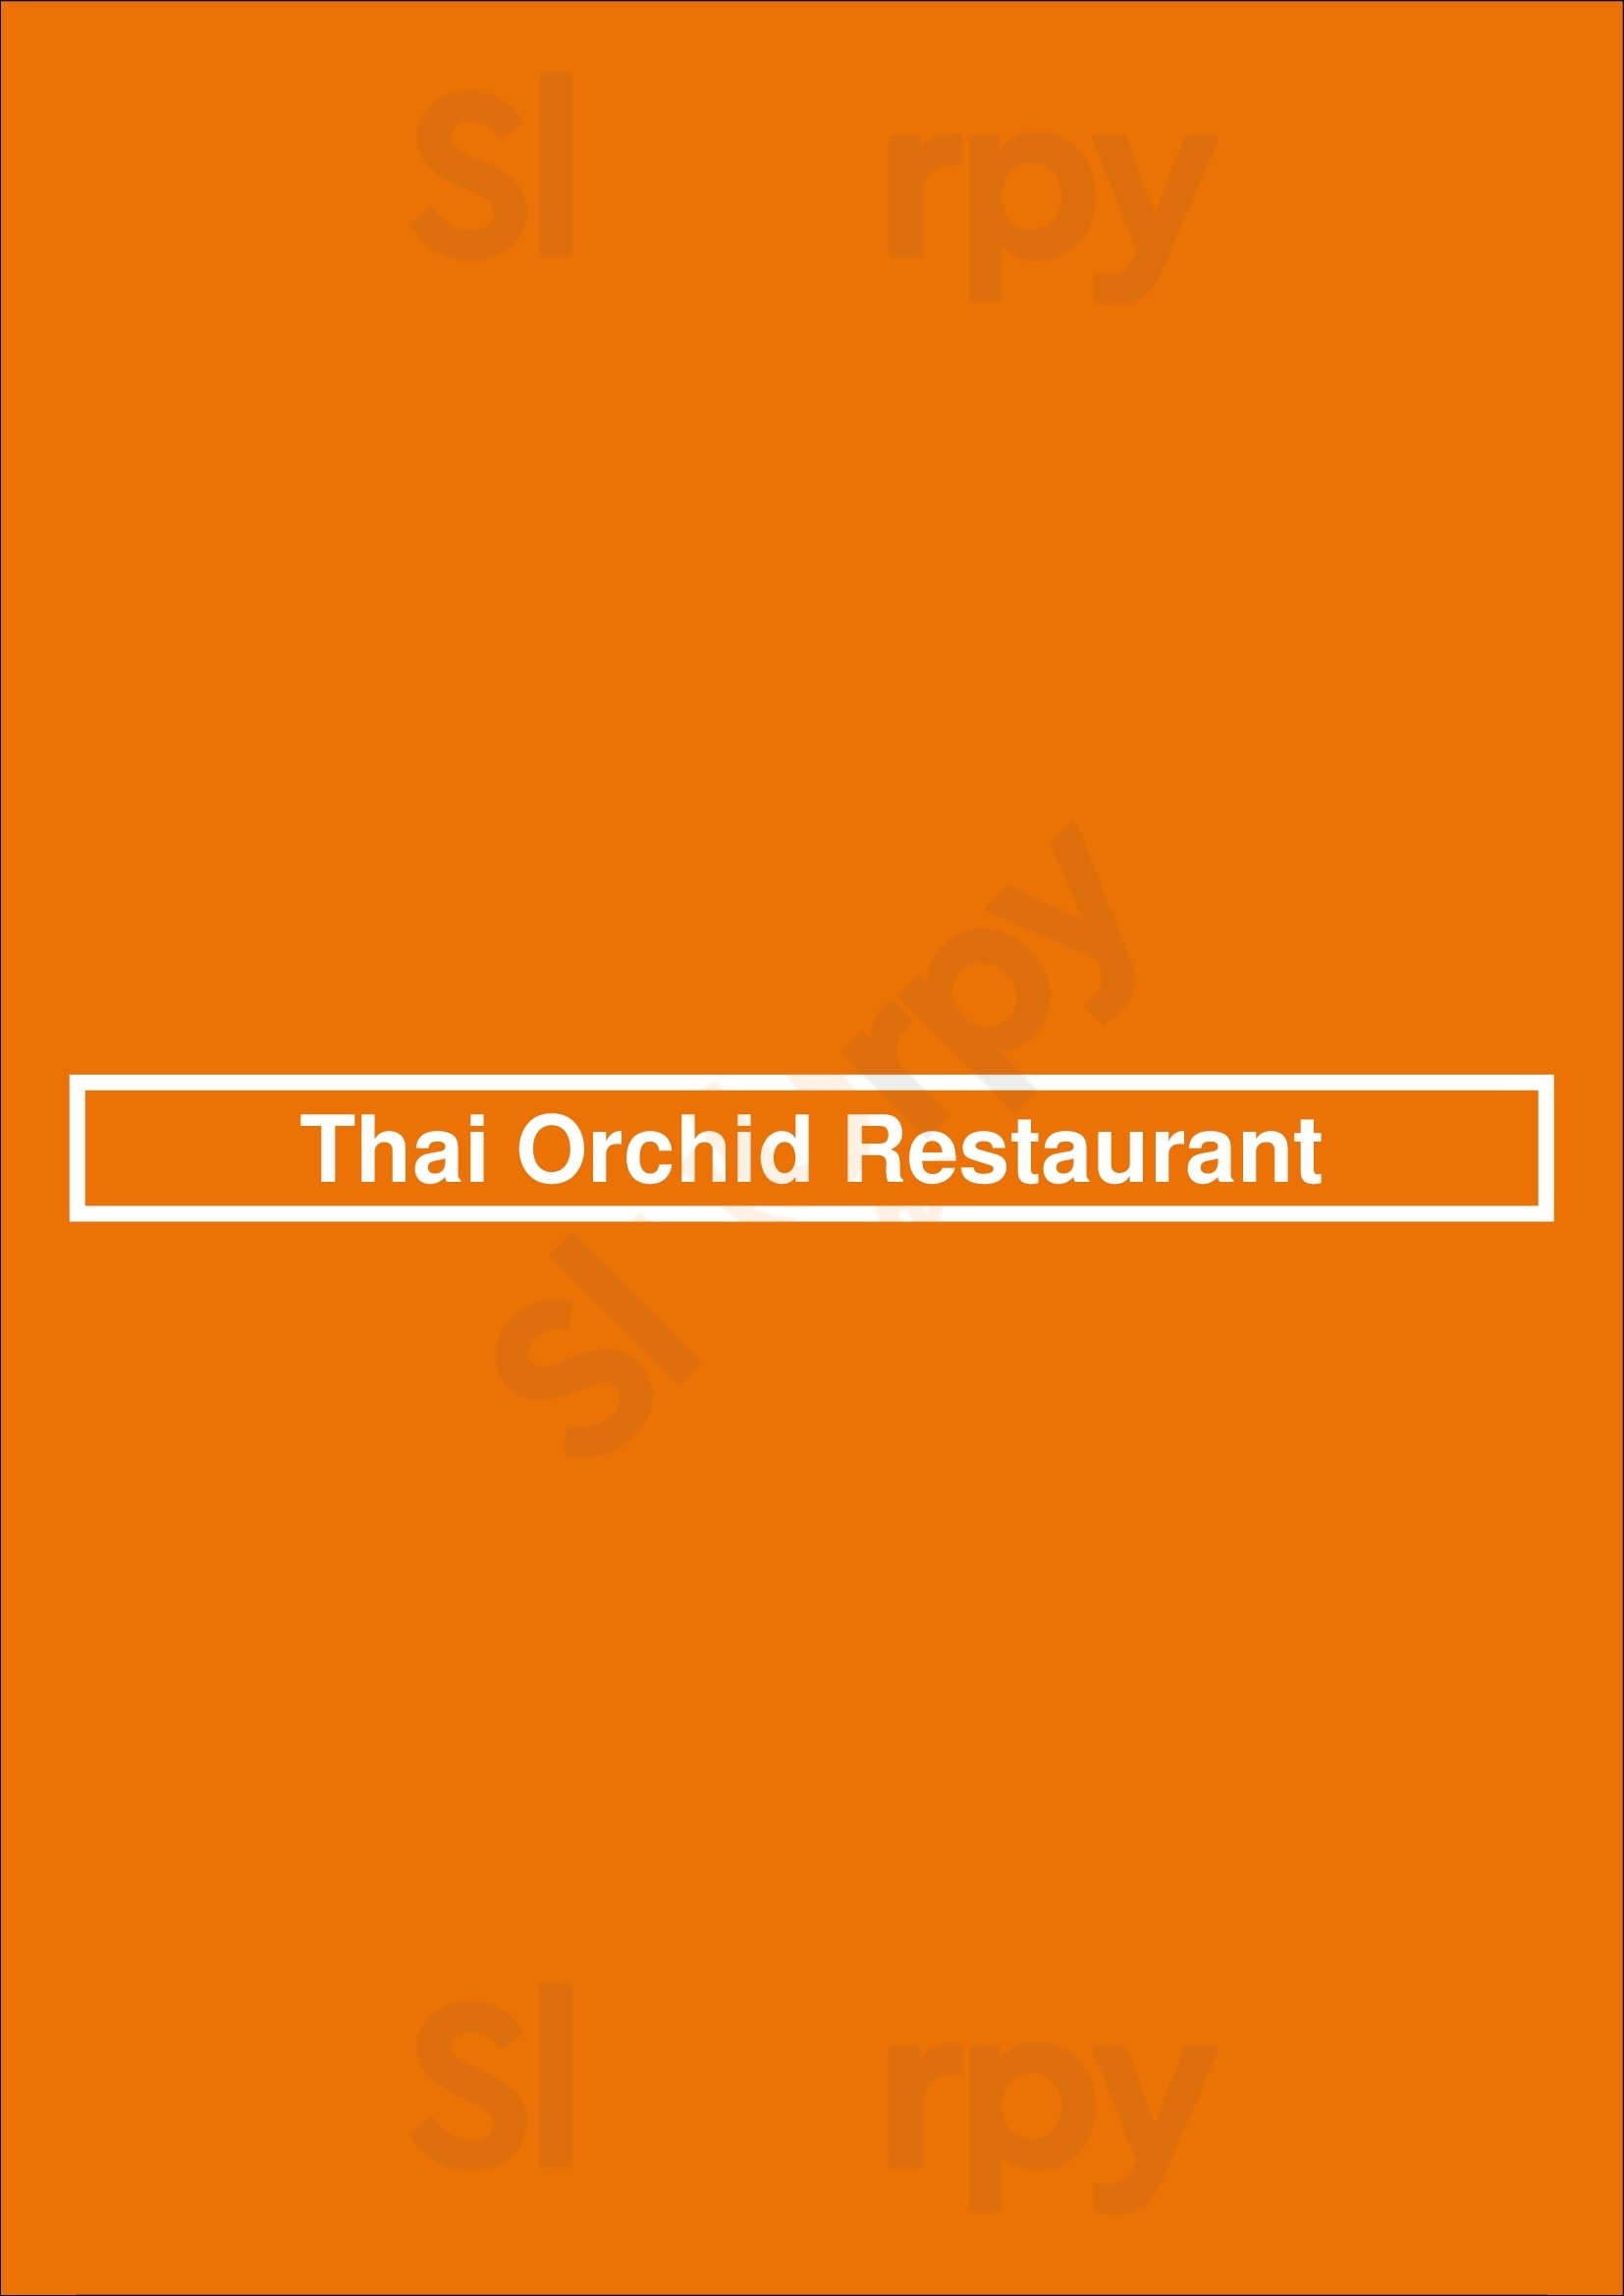 Thai Orchid Restaurant Charlotte Menu - 1